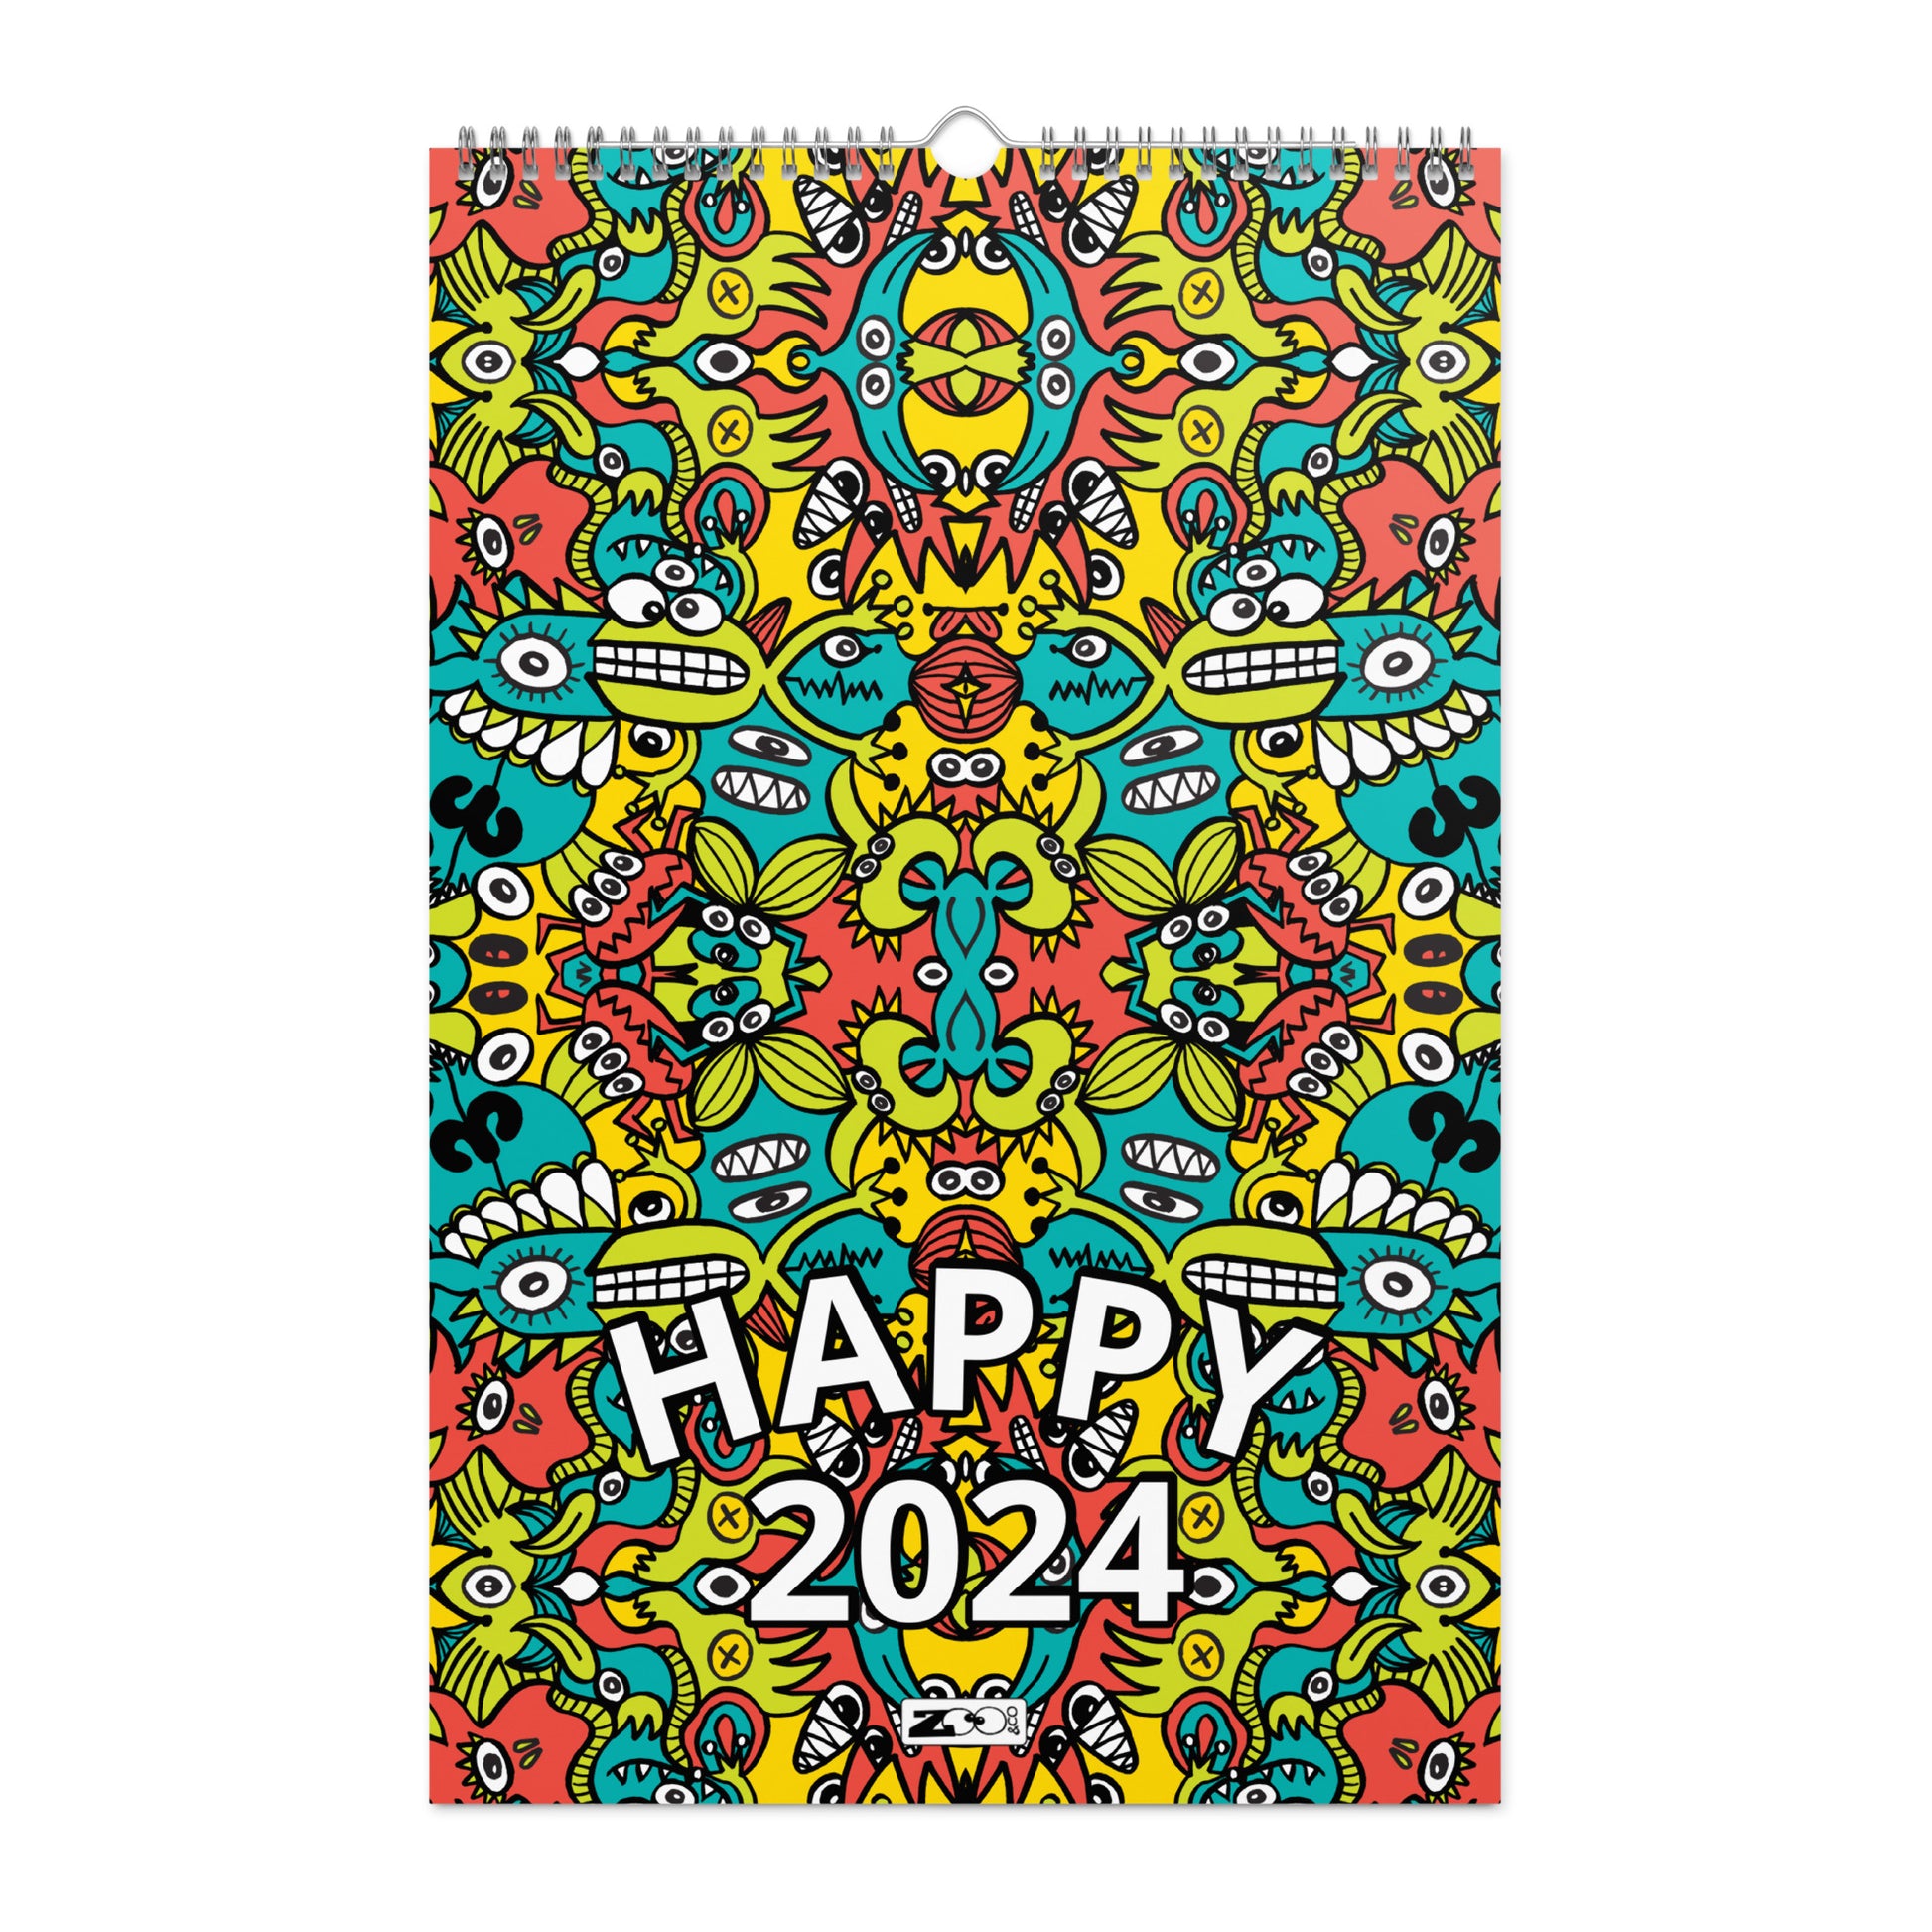 Zoo&co’s Doodle Art Wall calendar (2024). 11 x 17. Happy 2024. Cover